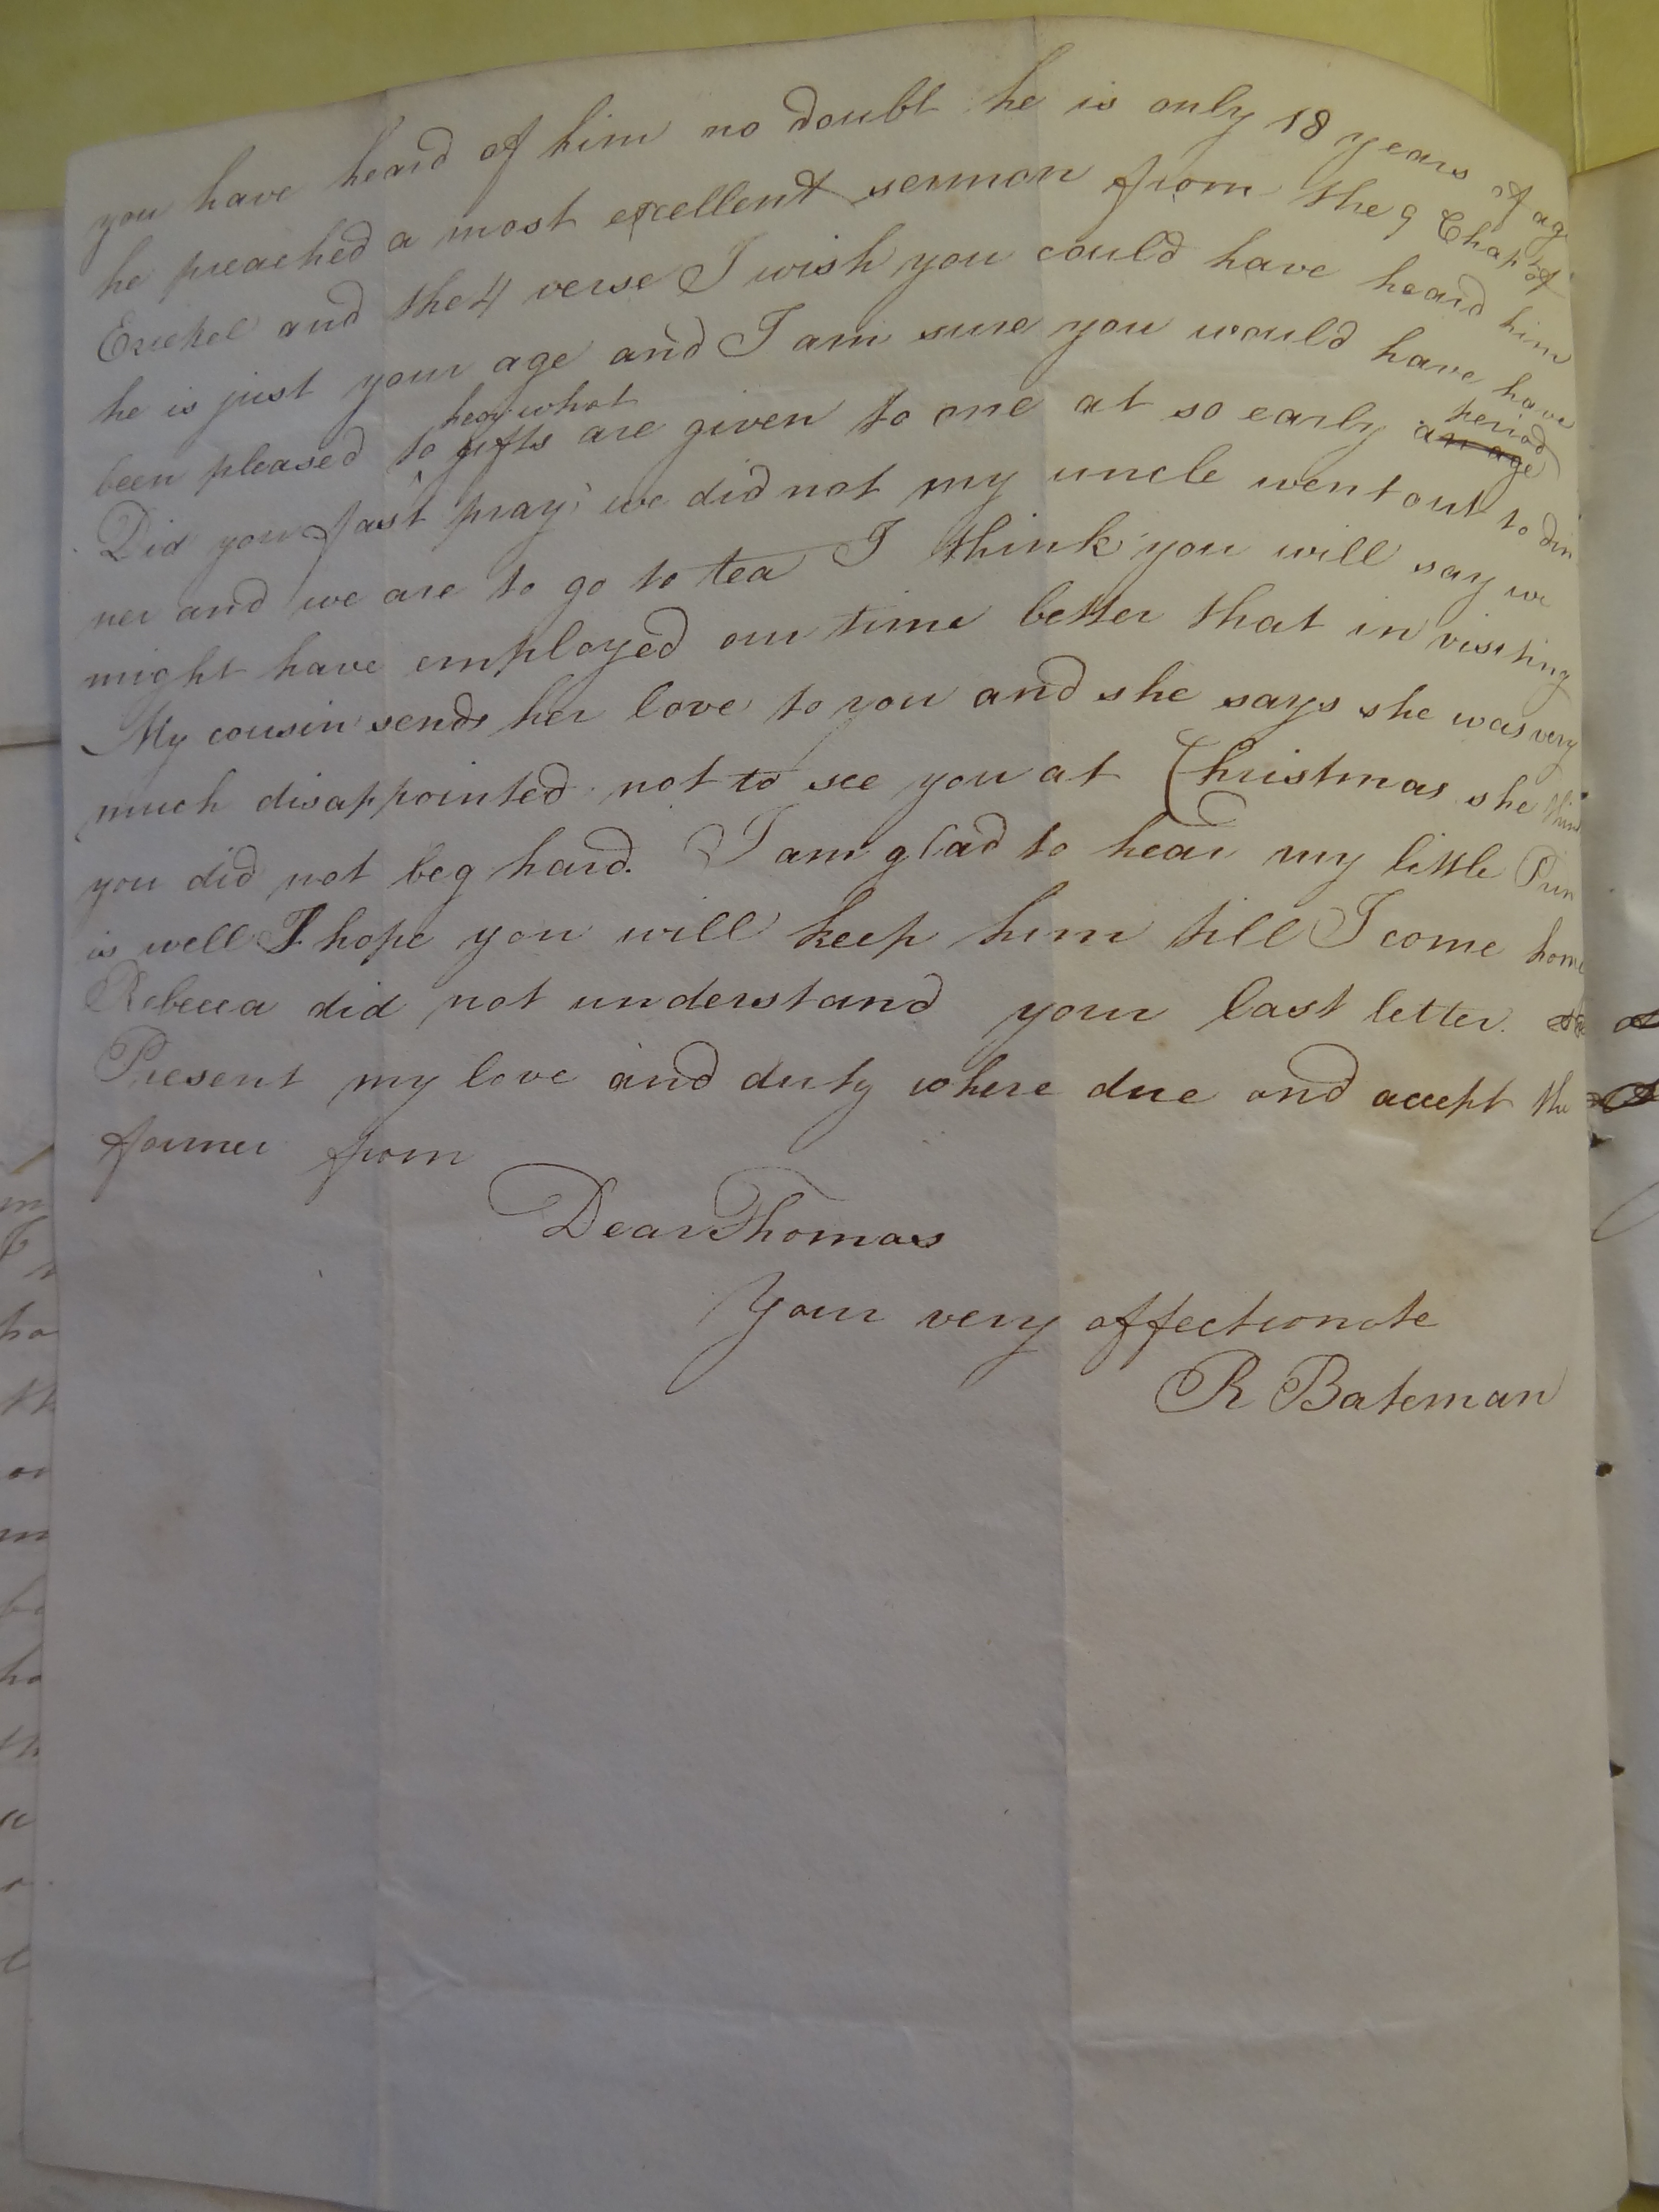 Image #2 of letter: Rebekah Hope to Thomas Bateman, 28 February 1810